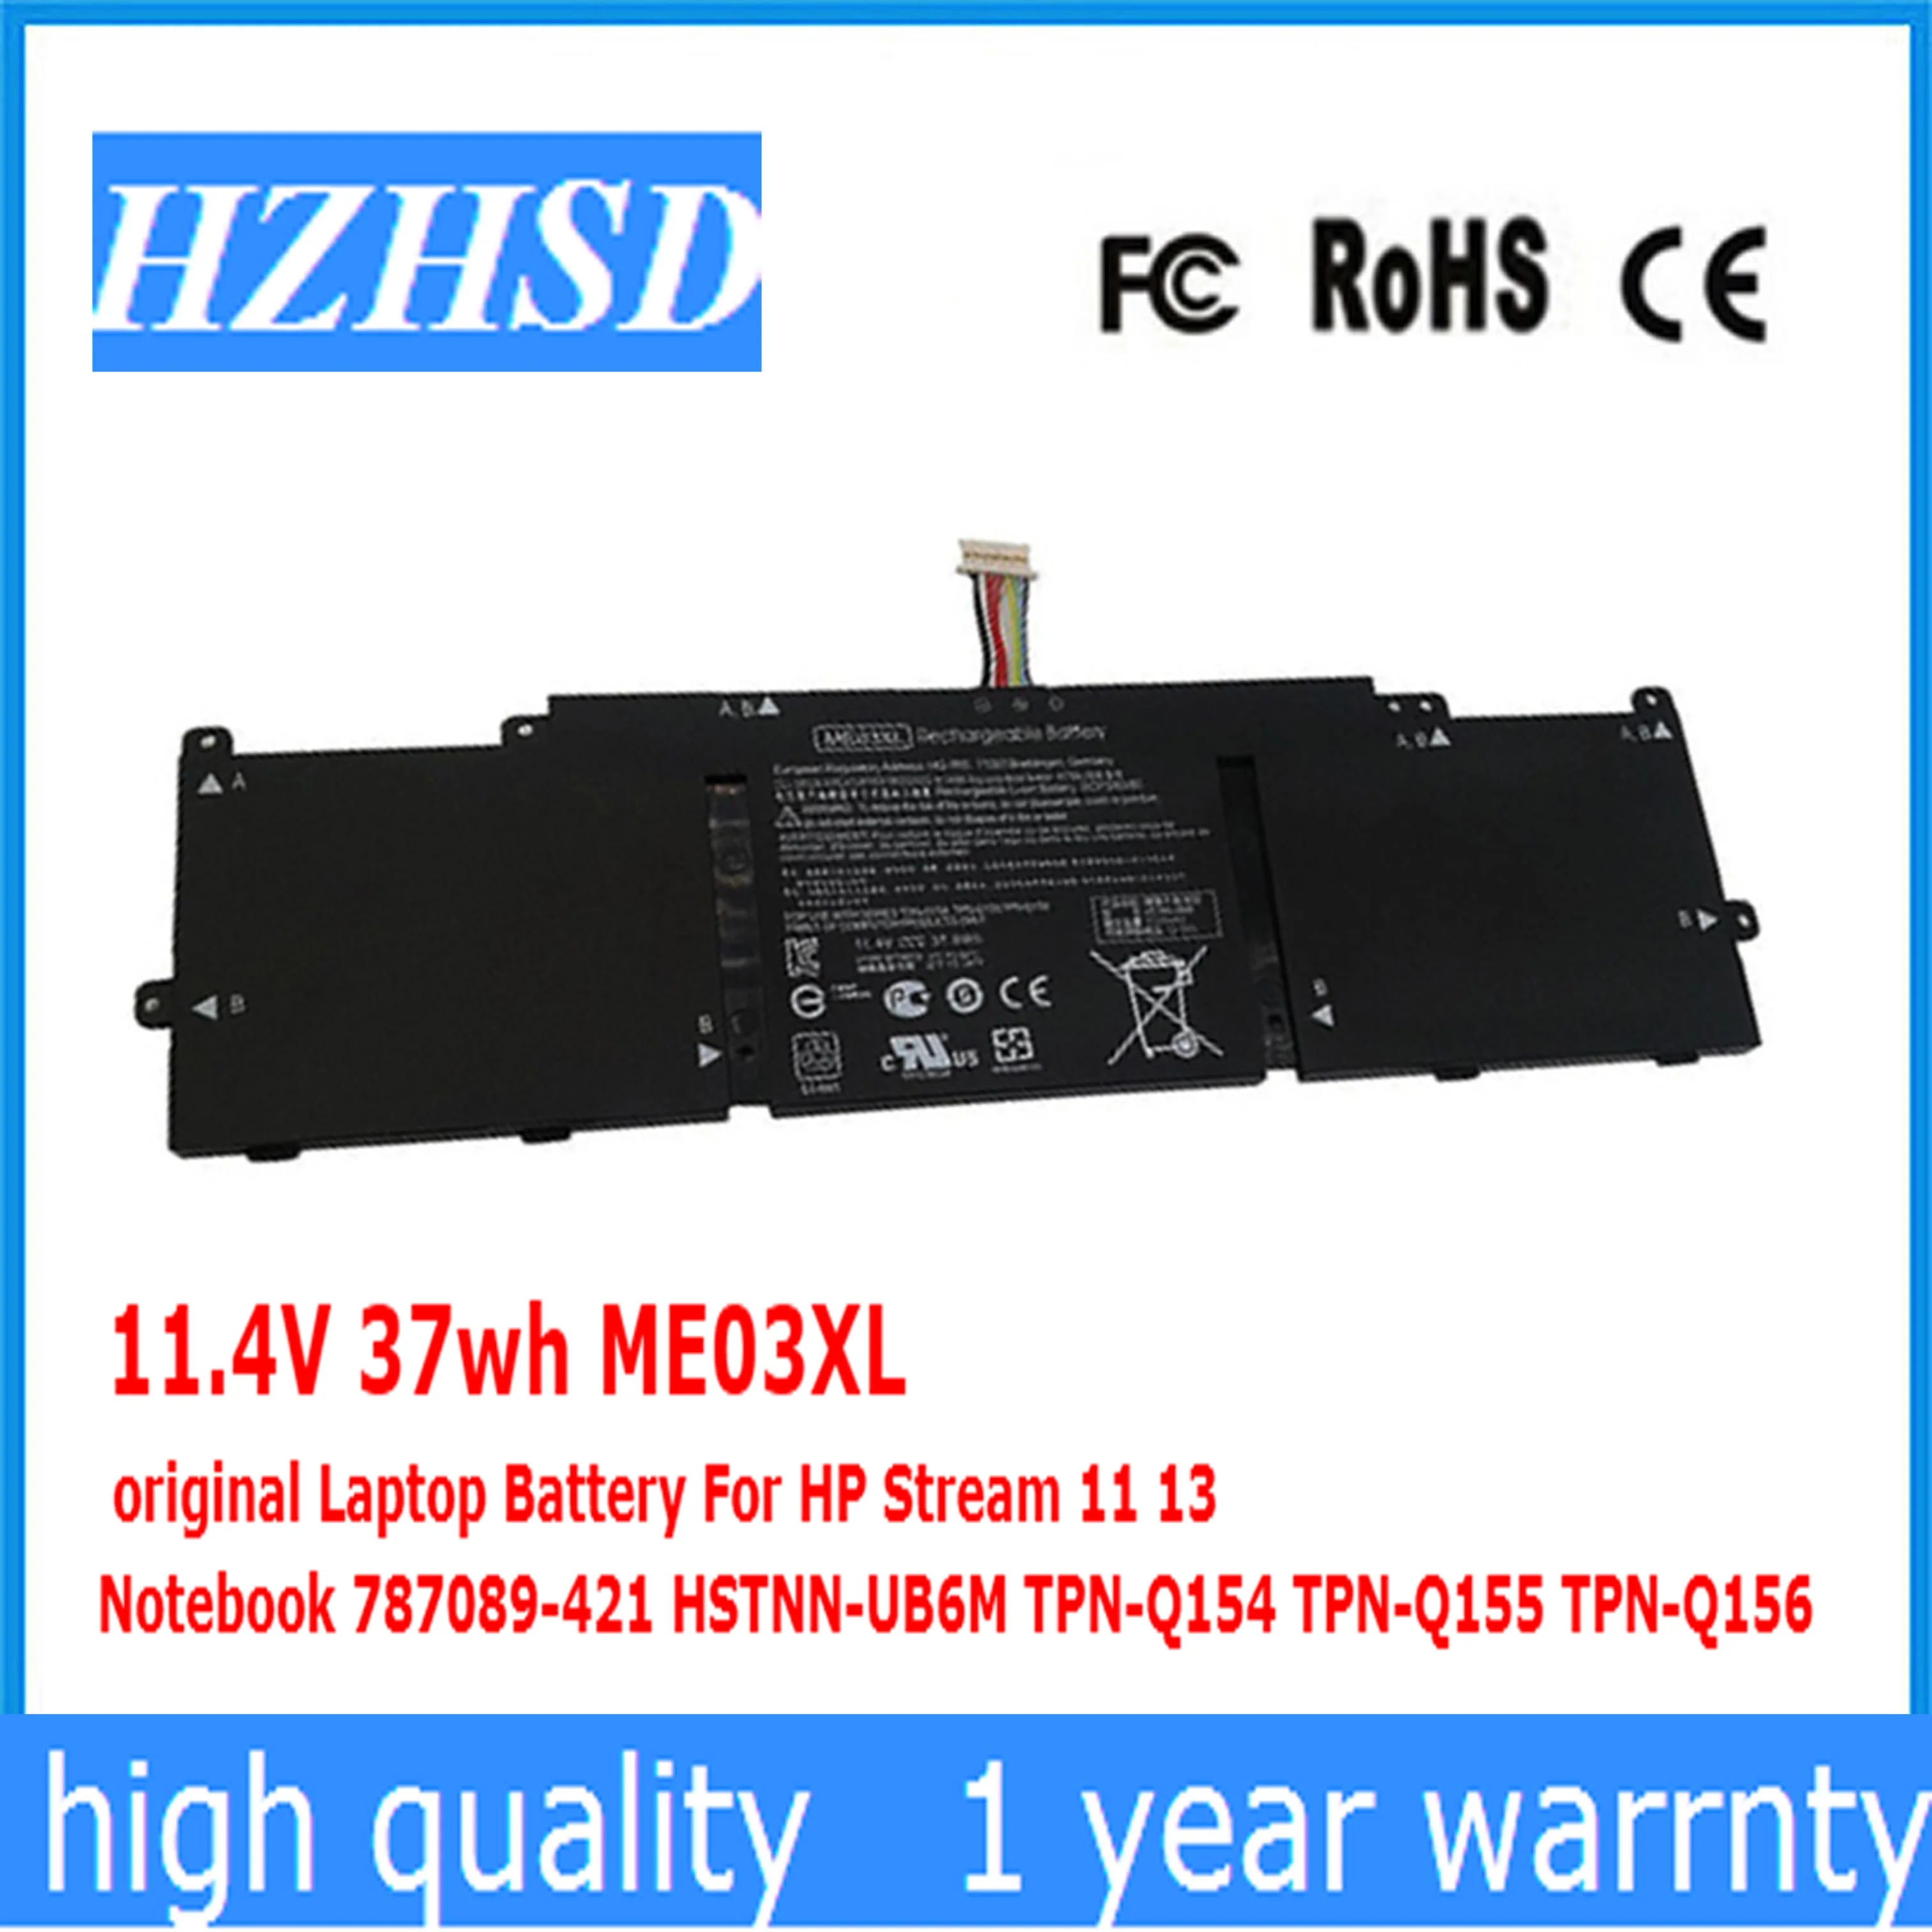 

11.4V 37wh ME03XL original Laptop Battery For HP Stream 11 13 Notebook 787089-421 HSTNN-UB6M TPN-Q154 TPN-Q155 TPN-Q156